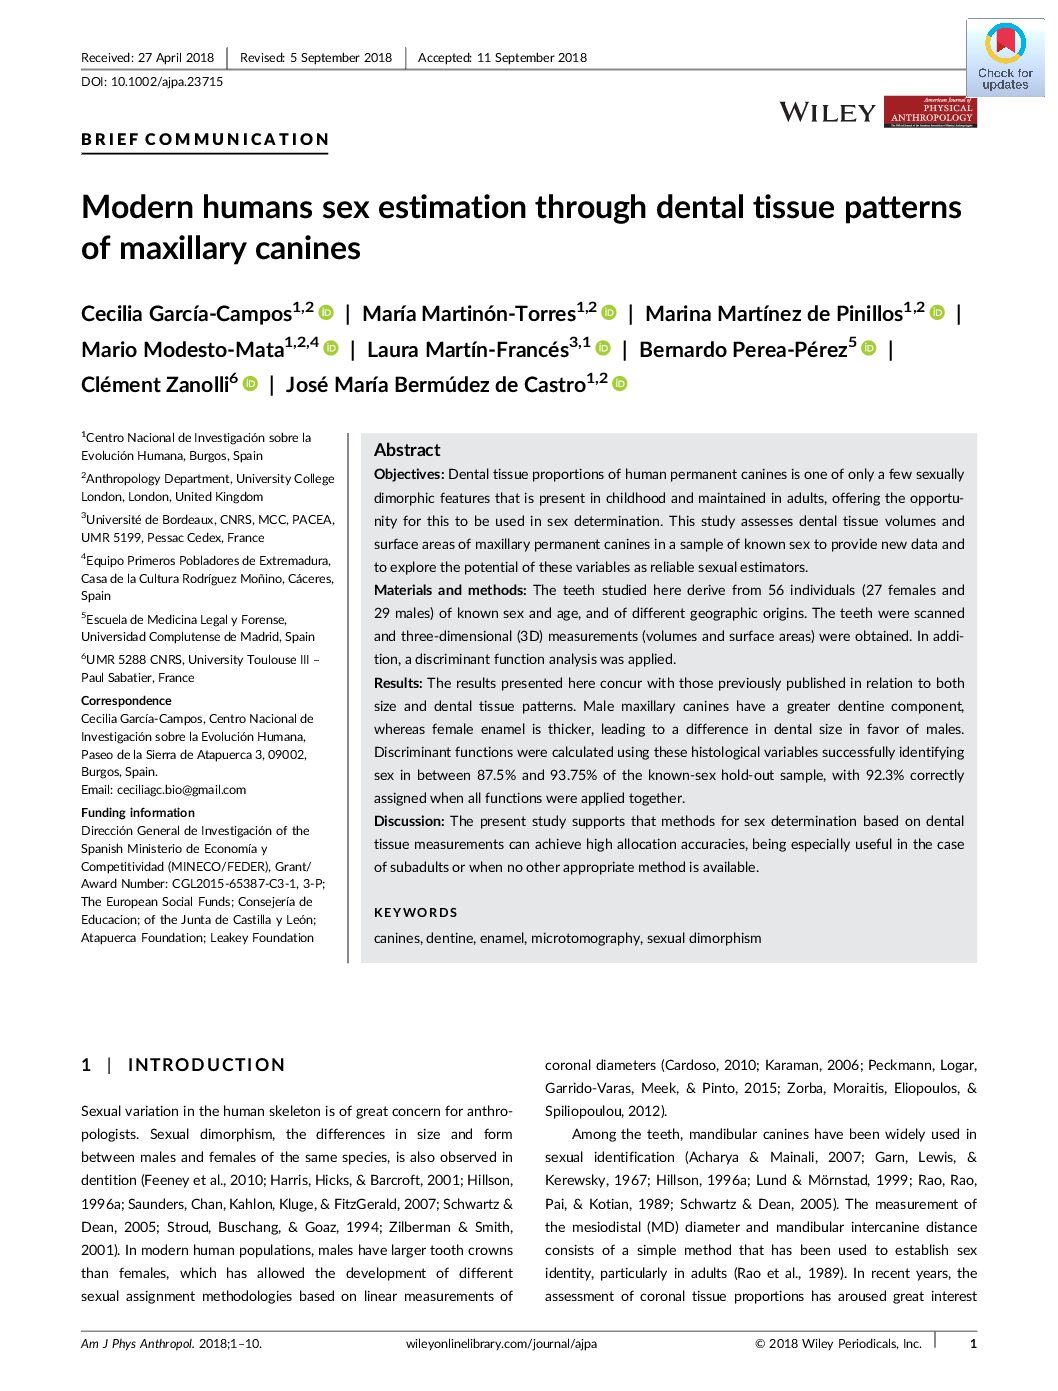 Modern humans sex estimation through dental tissue patterns of maxillary canines